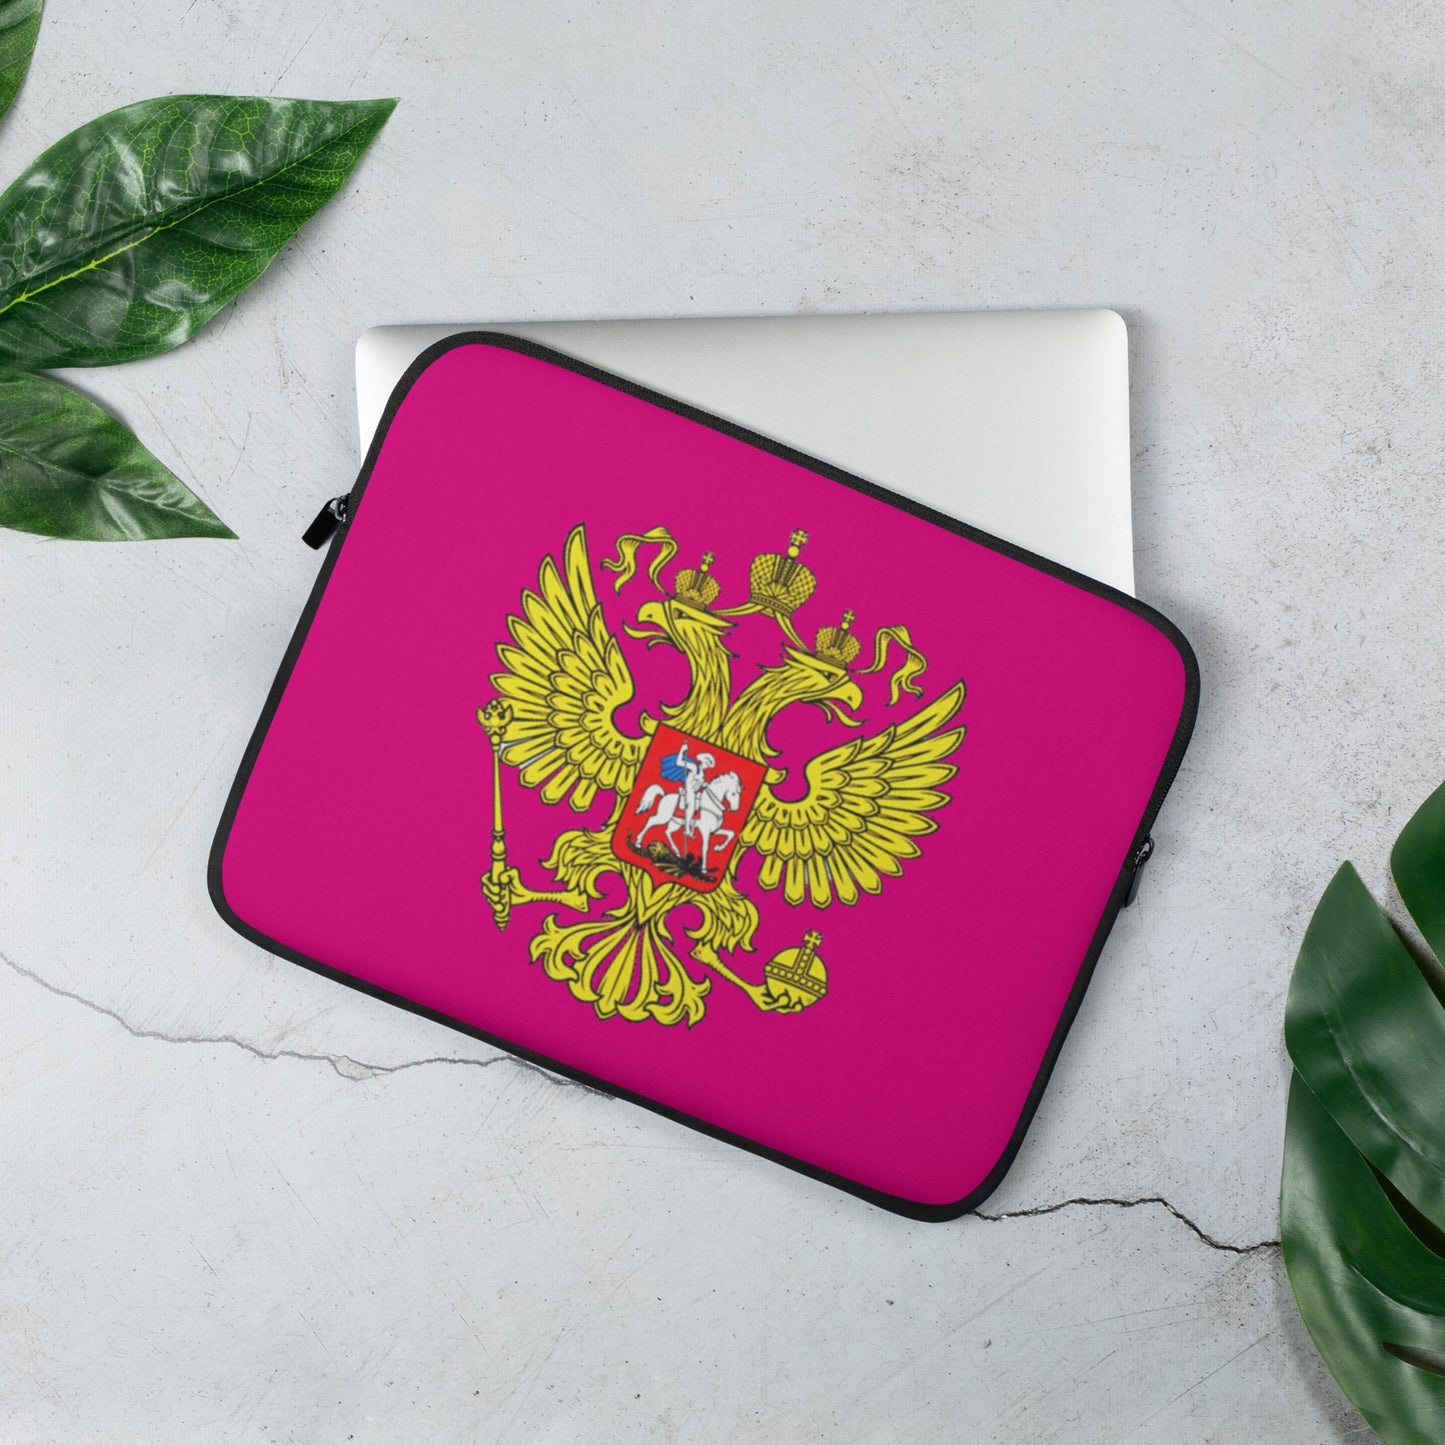 Laptop-Tasche mit Russland-Wappen in lila